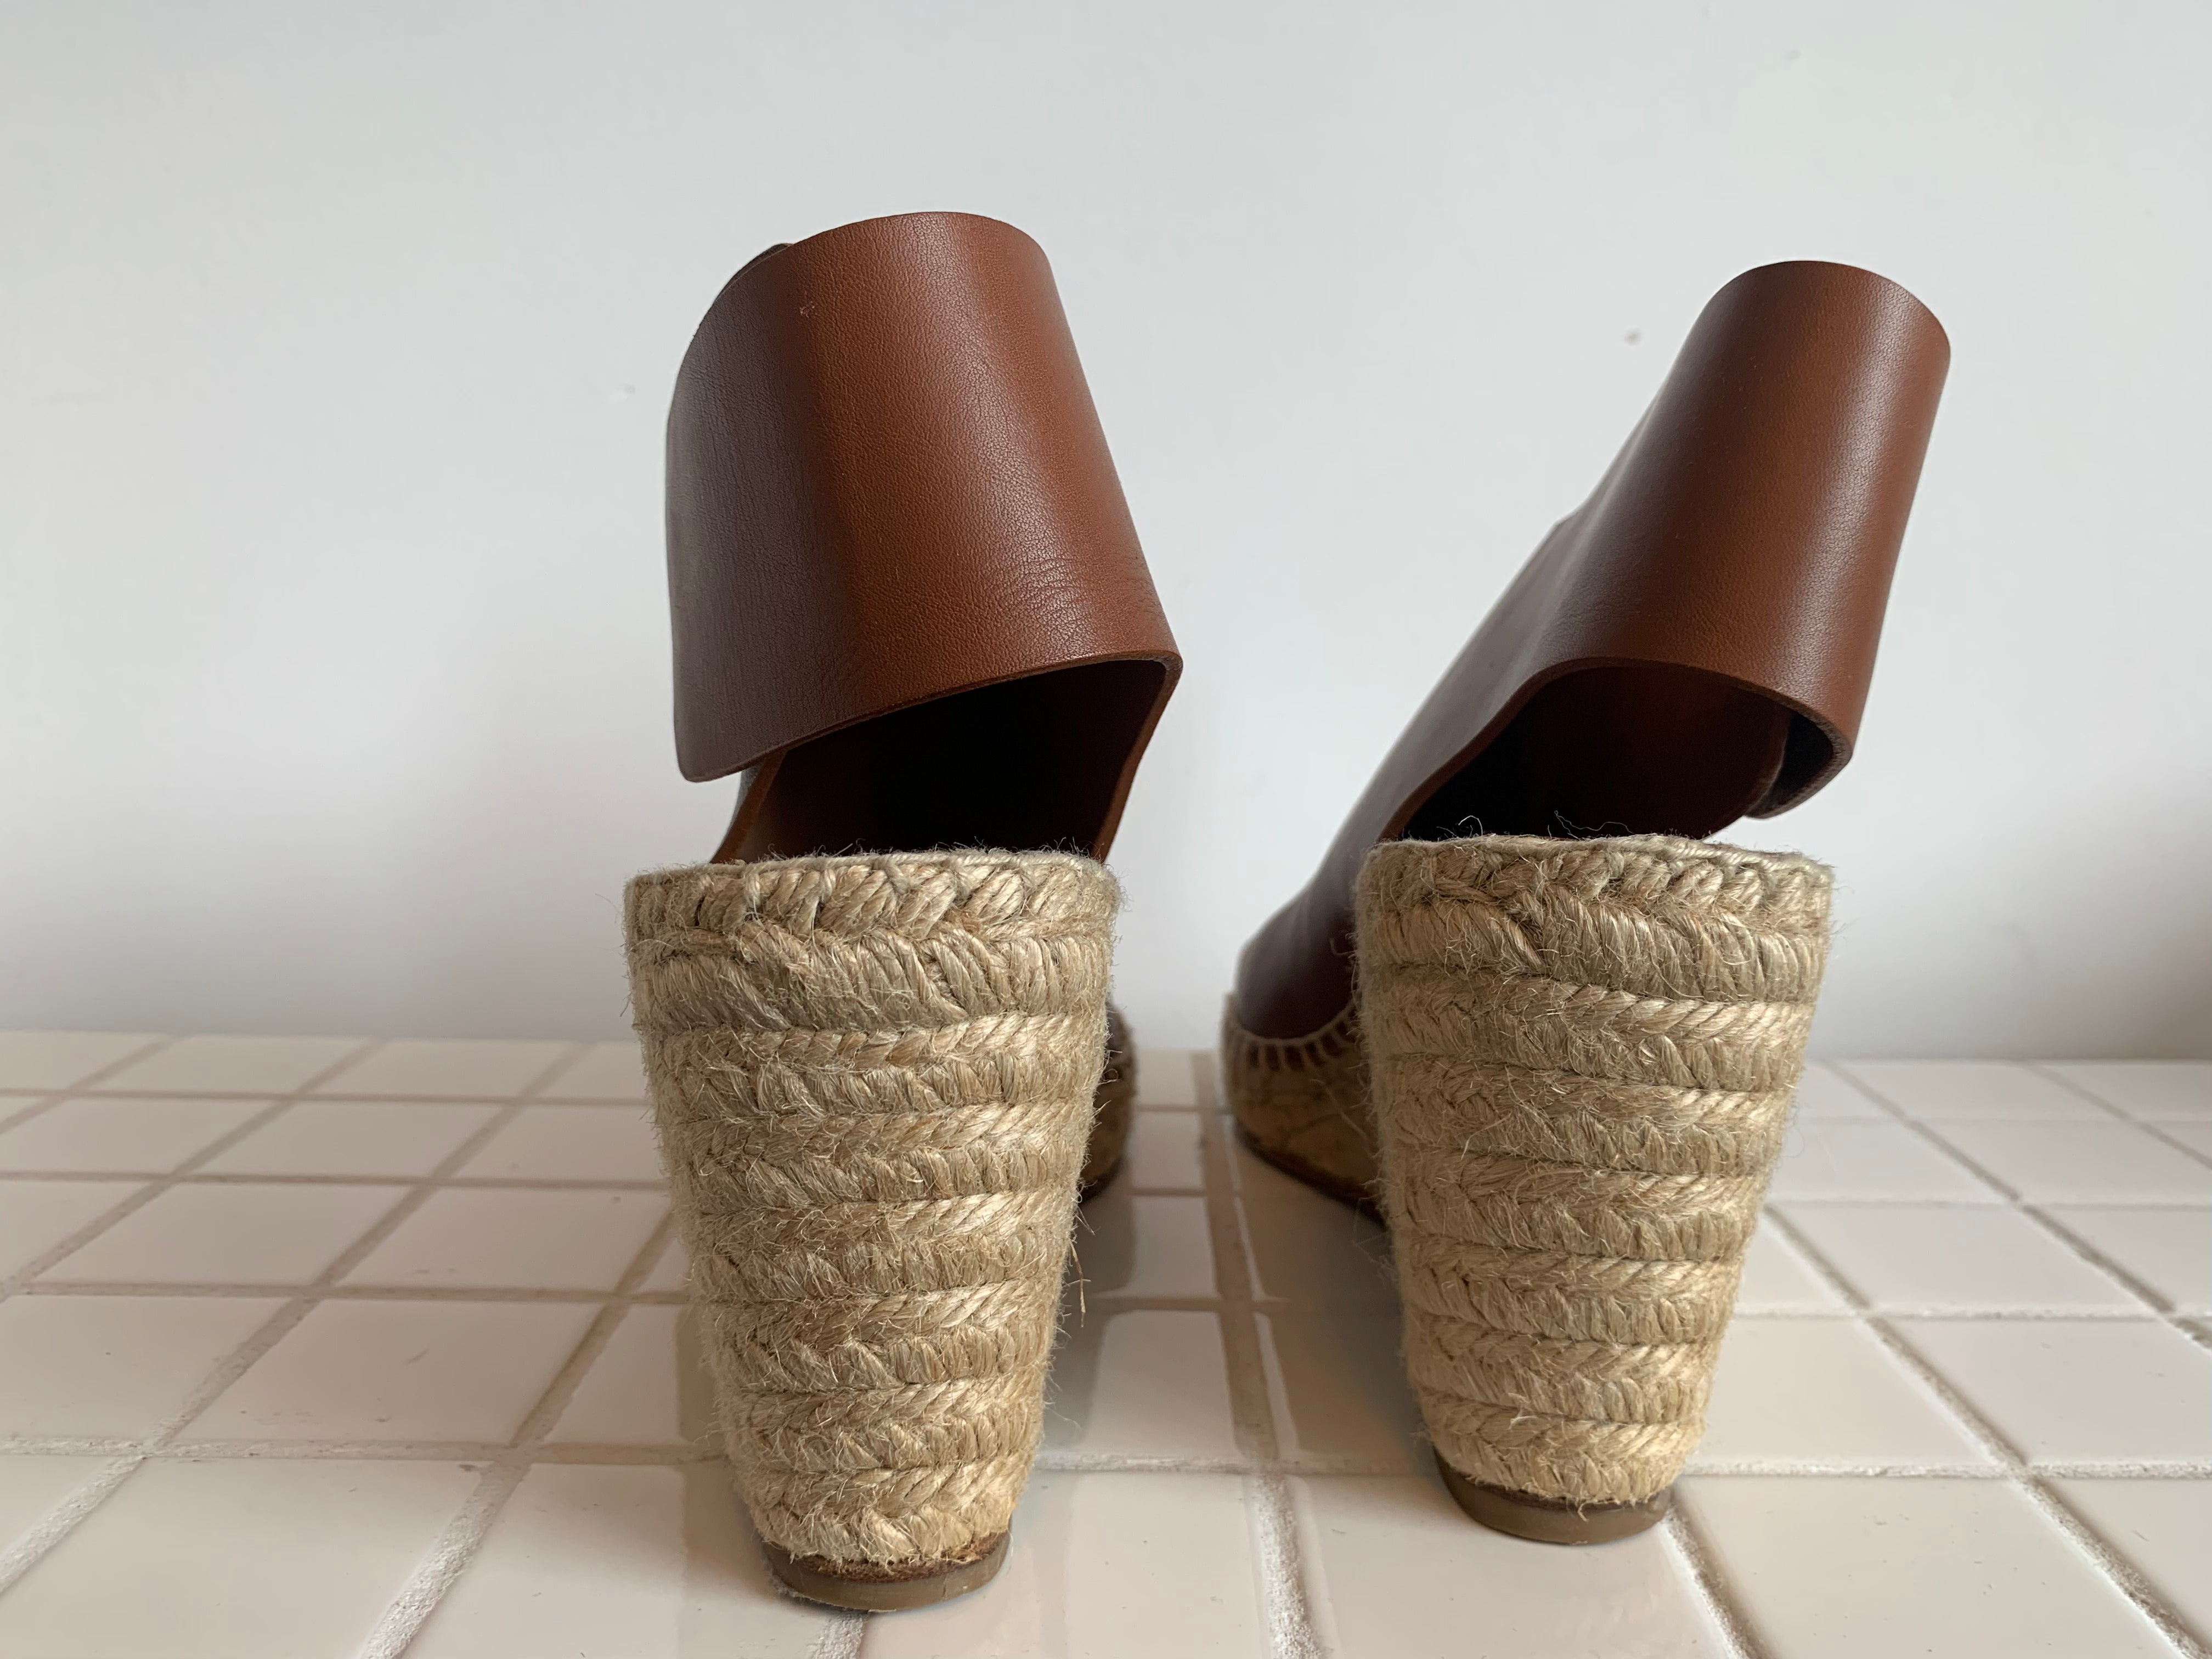 Celine Leather Espadrille Wedge Sandals